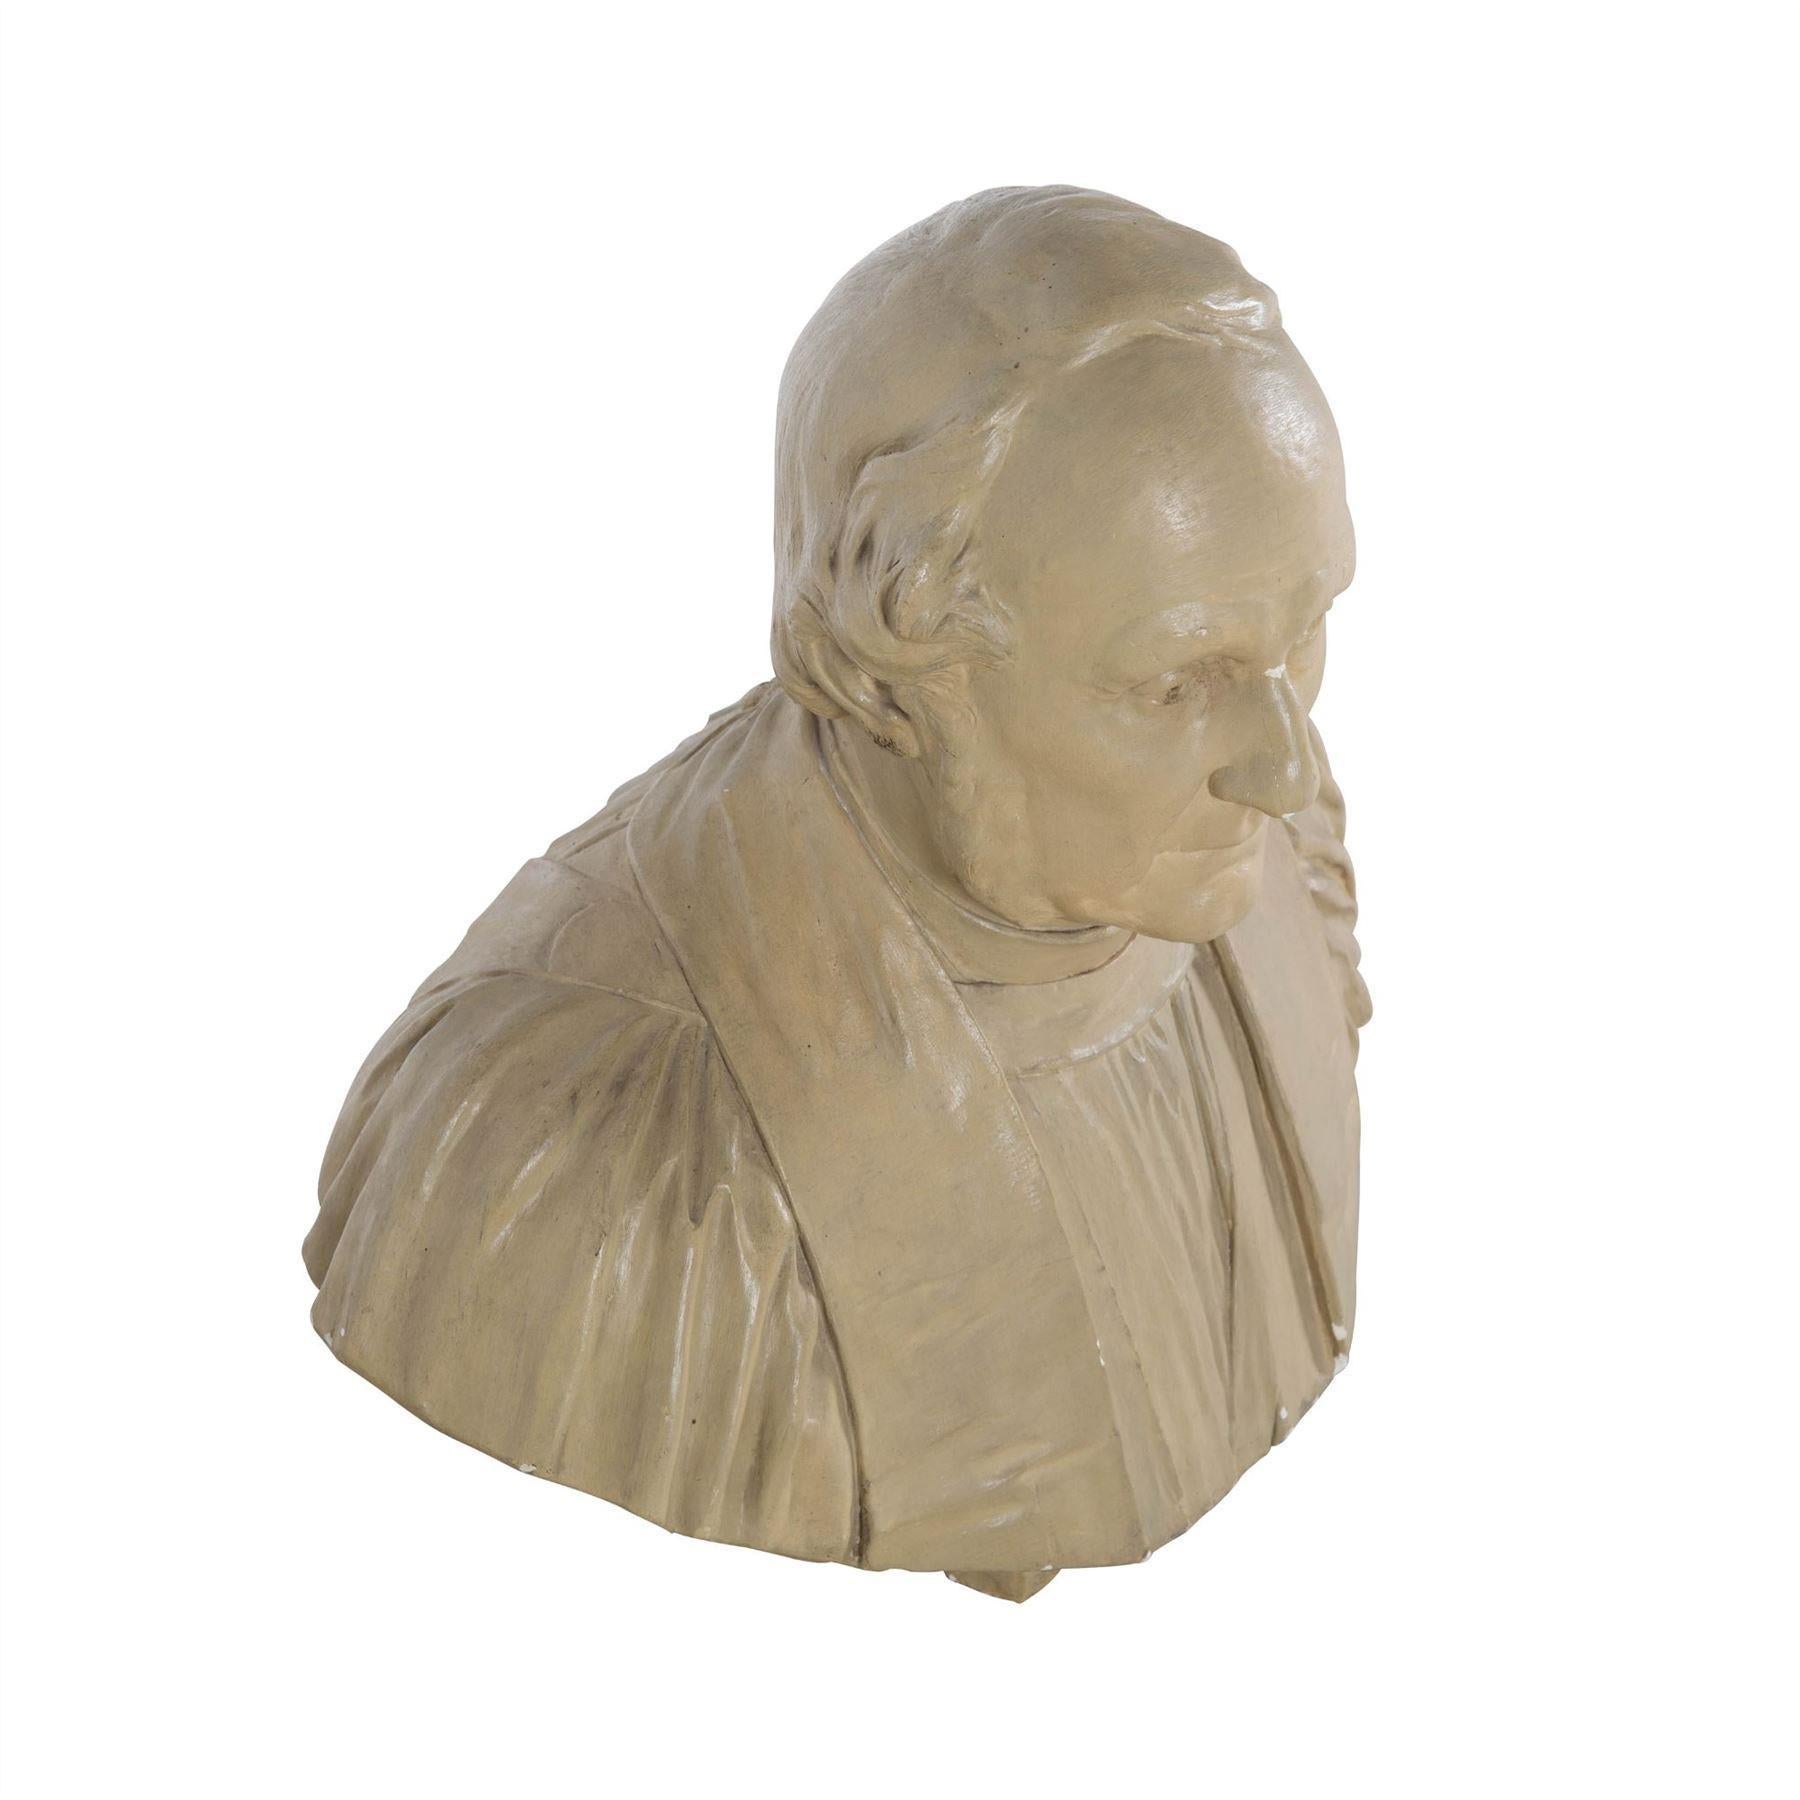 19th century plaster bust.